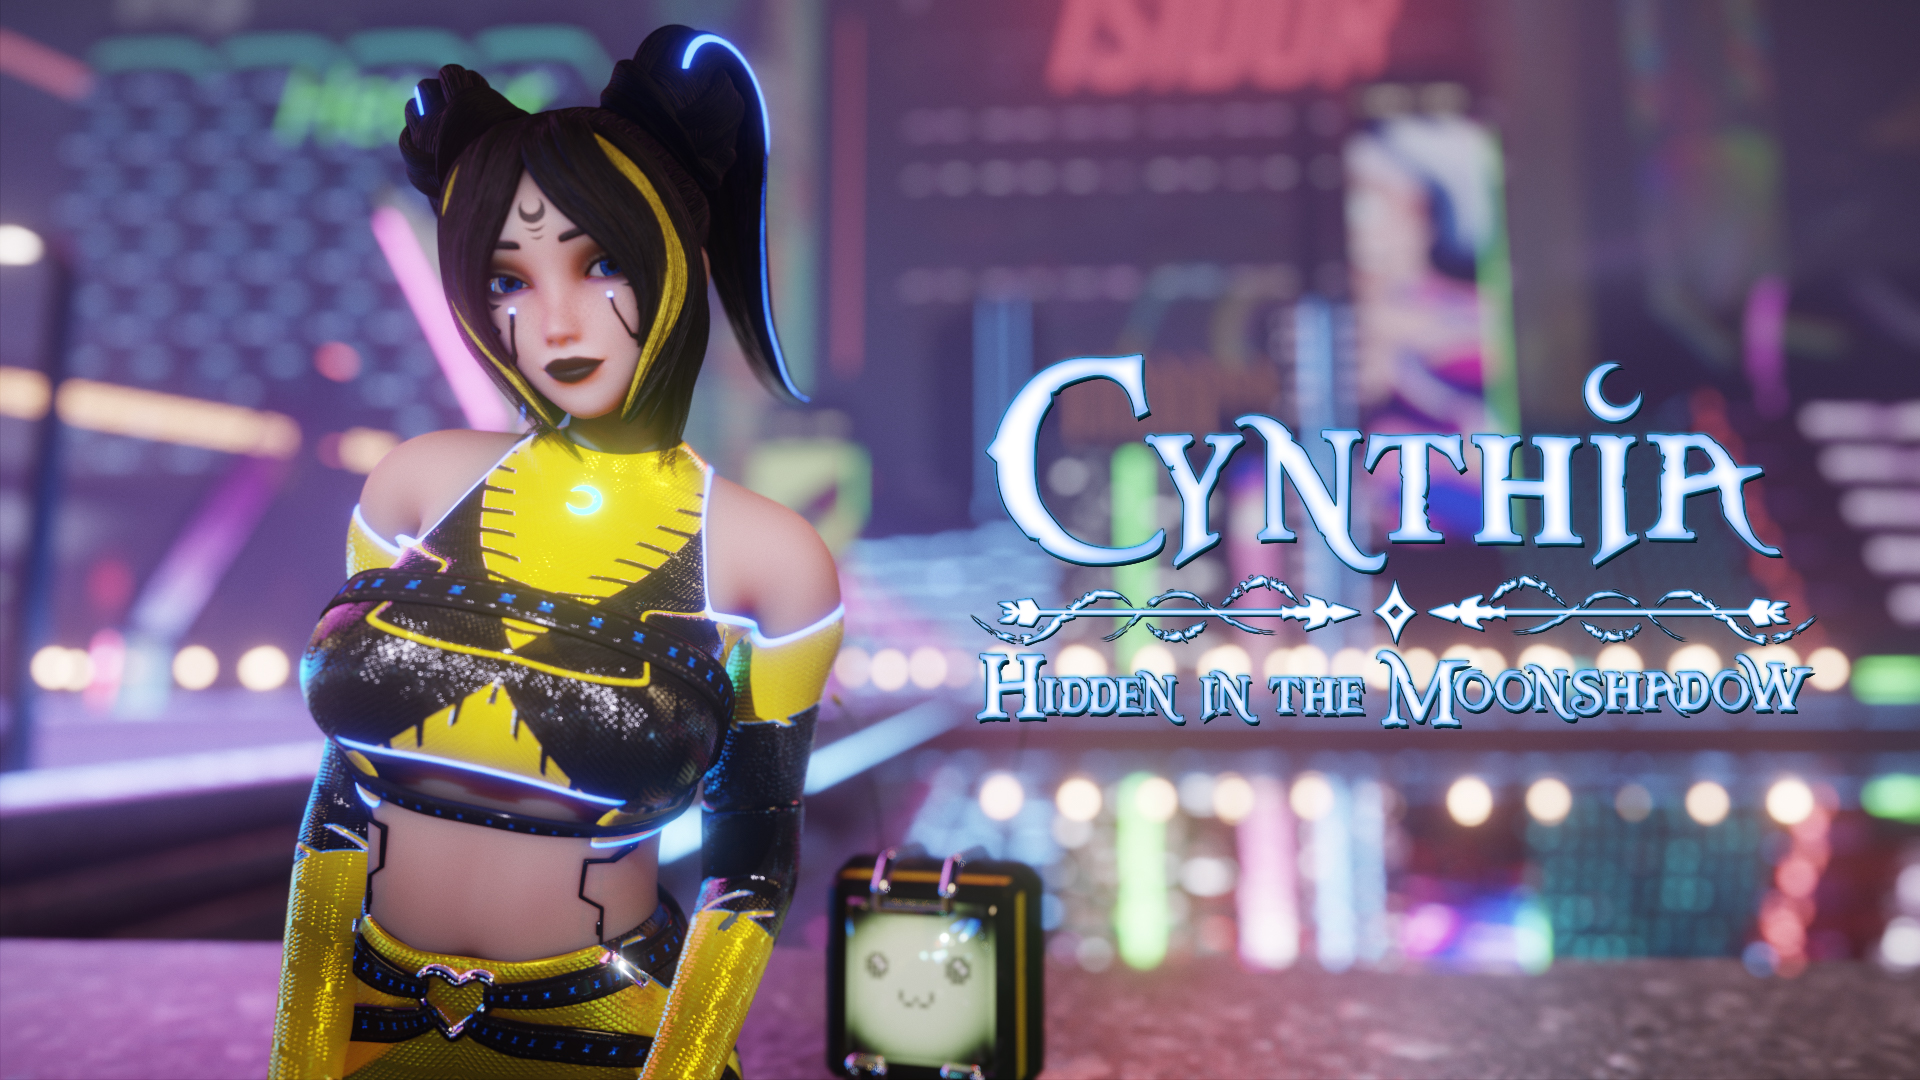 Cynthia: Hidden in the Moonshadow - 'Cyberthia' Costume